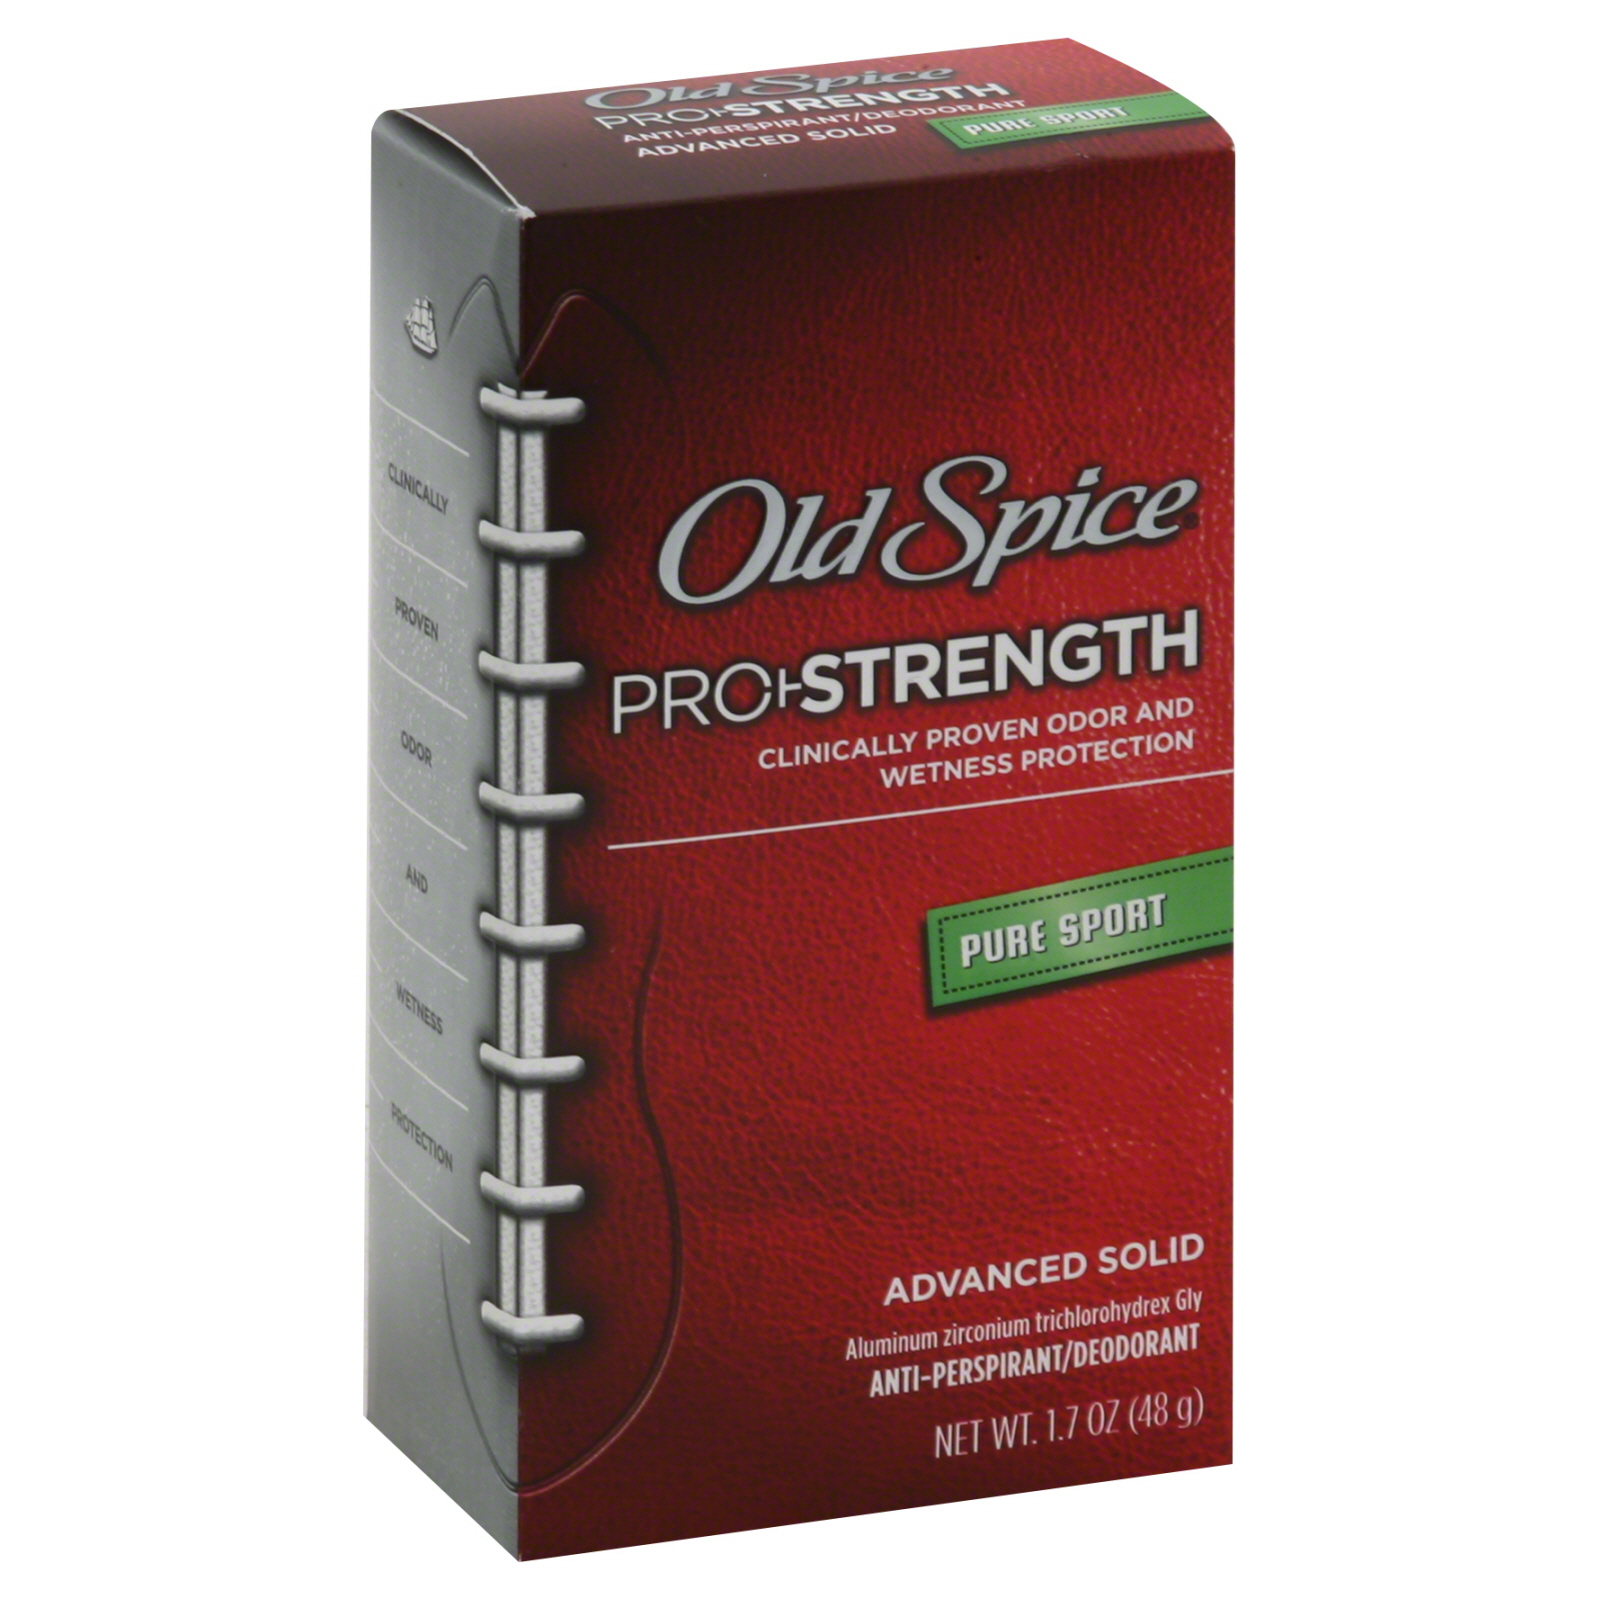 Old Spice Pro Strength Anti-Perspirant/Deodorant, Advanced Solid, Pure Sport, 1.7 oz (48 g)